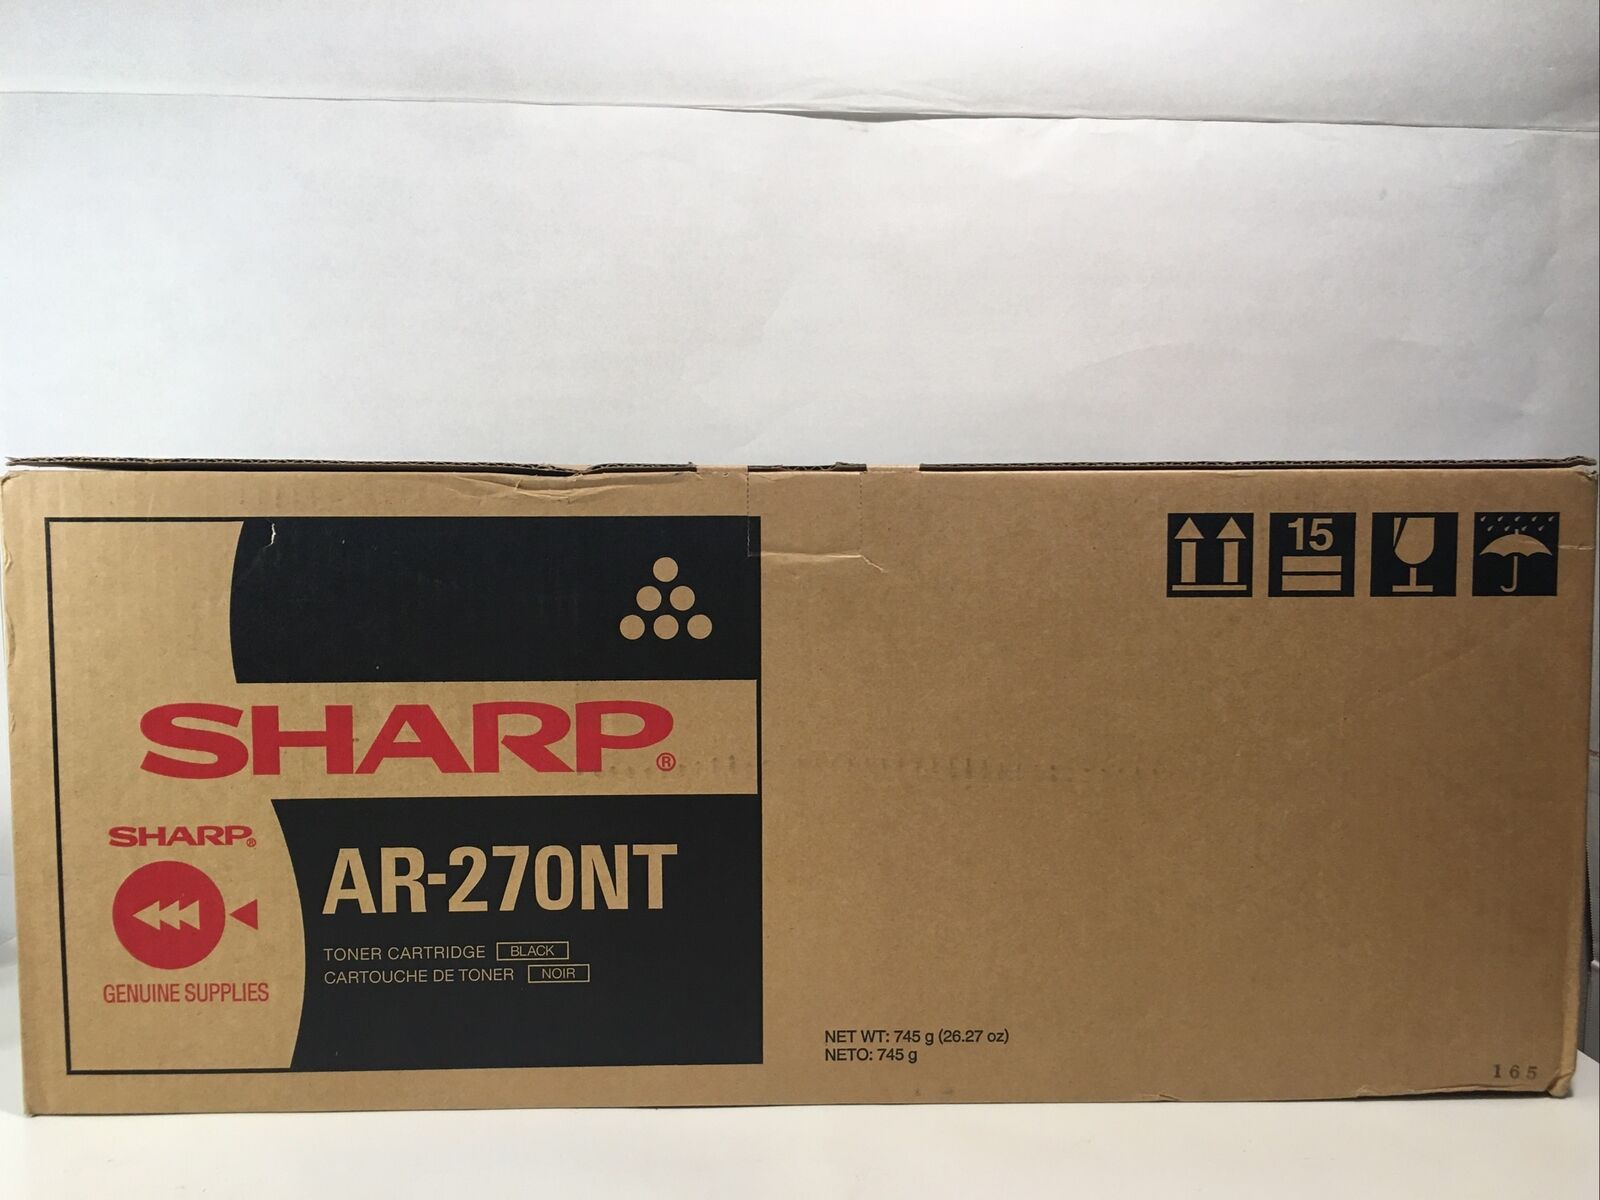 NEW GENUINE OEM SHARP AR-270NT BLACK TONER CARTRIDGE Open Box